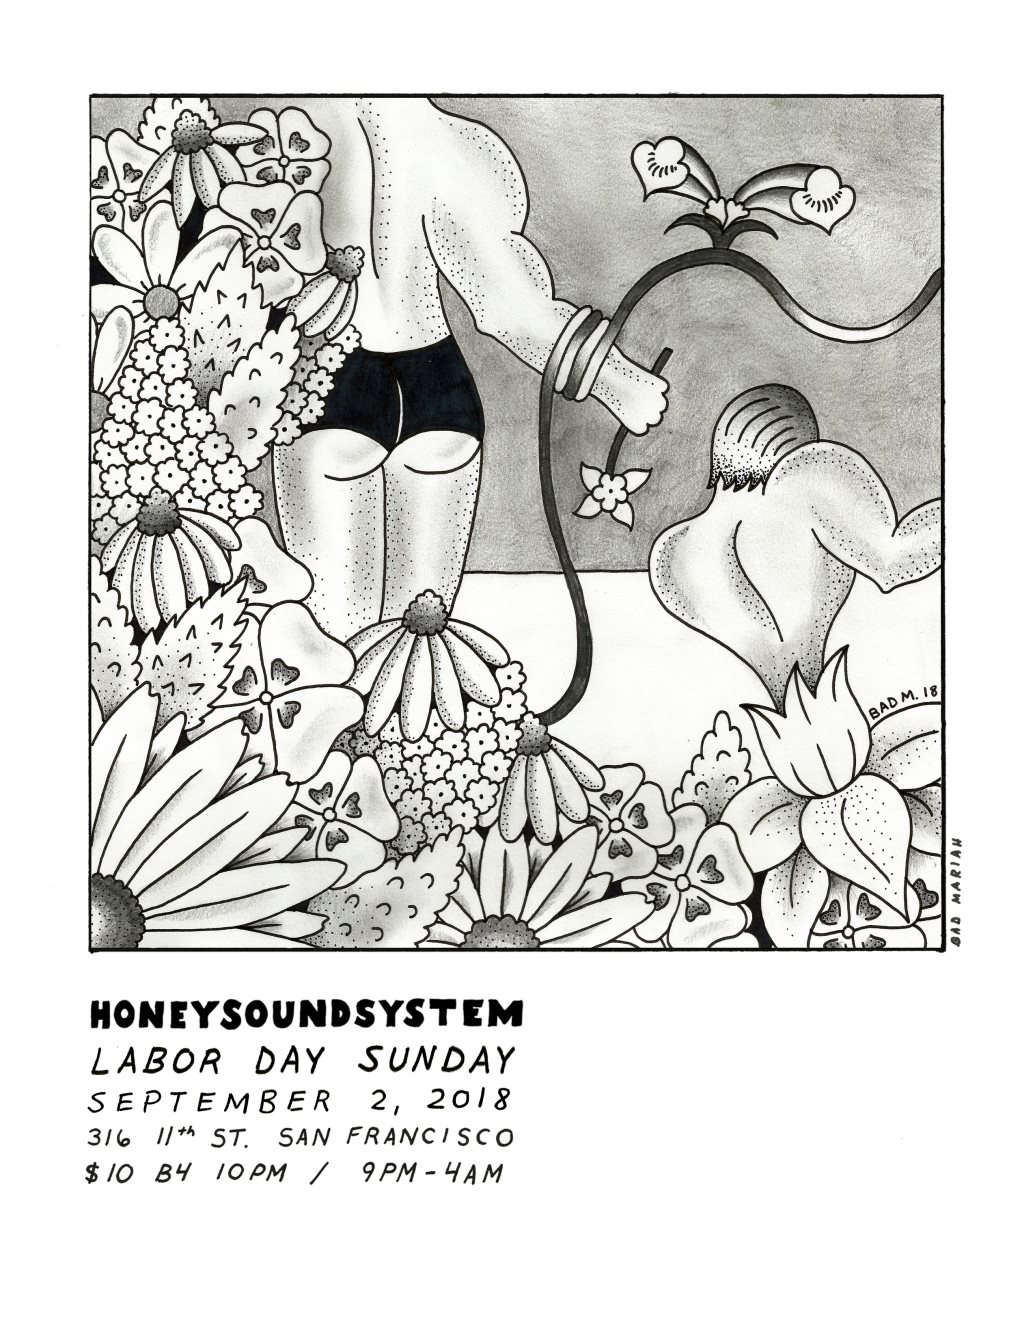 Honey Soundsystem - Labor Day - Flyer front